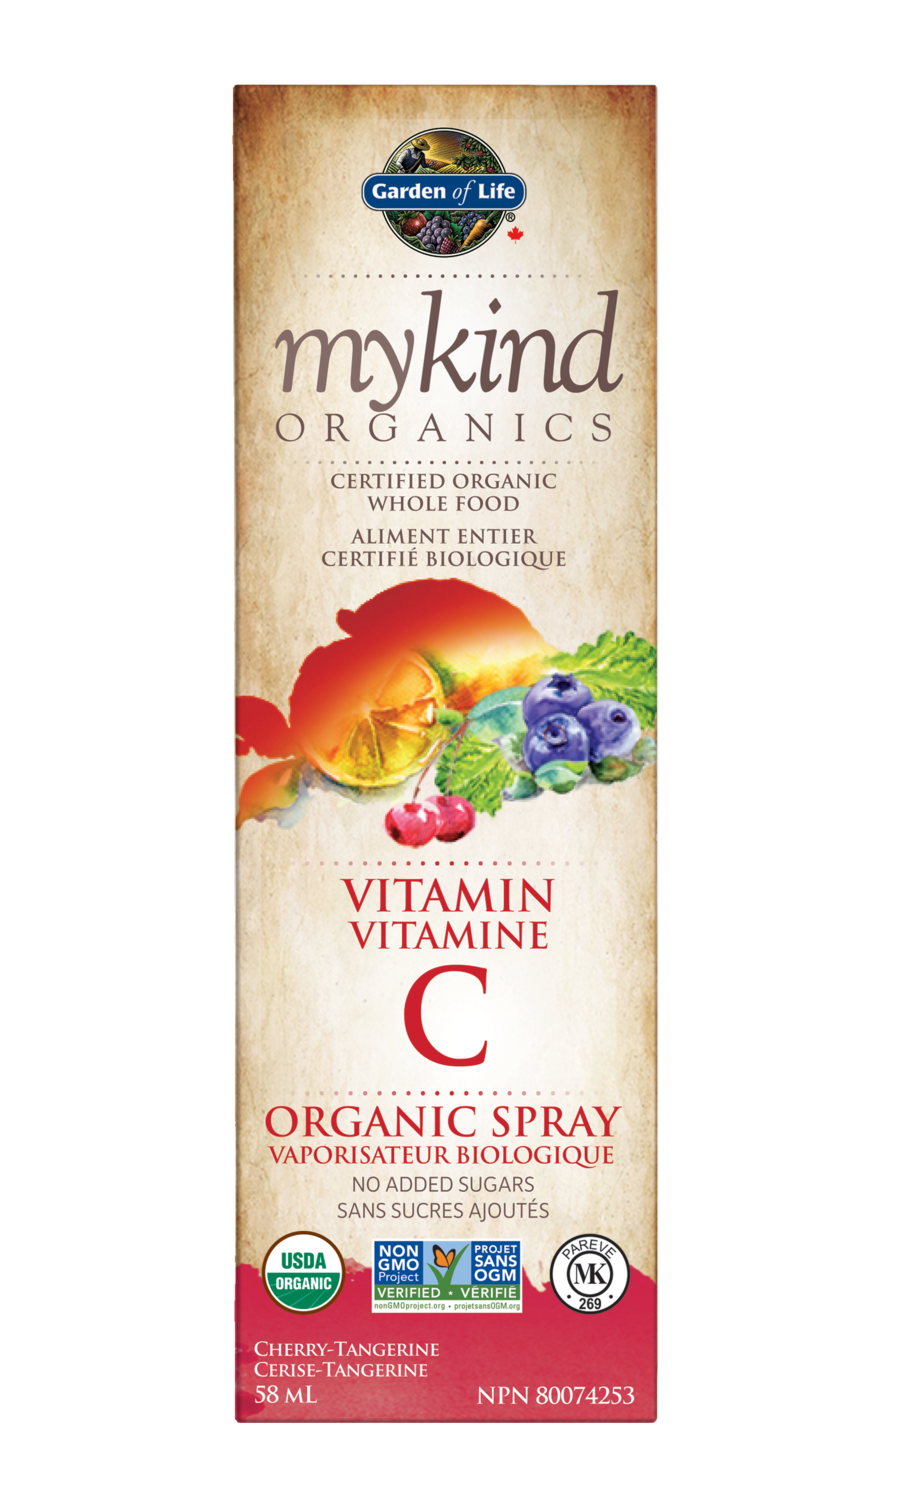 Garden of Life Mykind Organics Vitamin C Spray